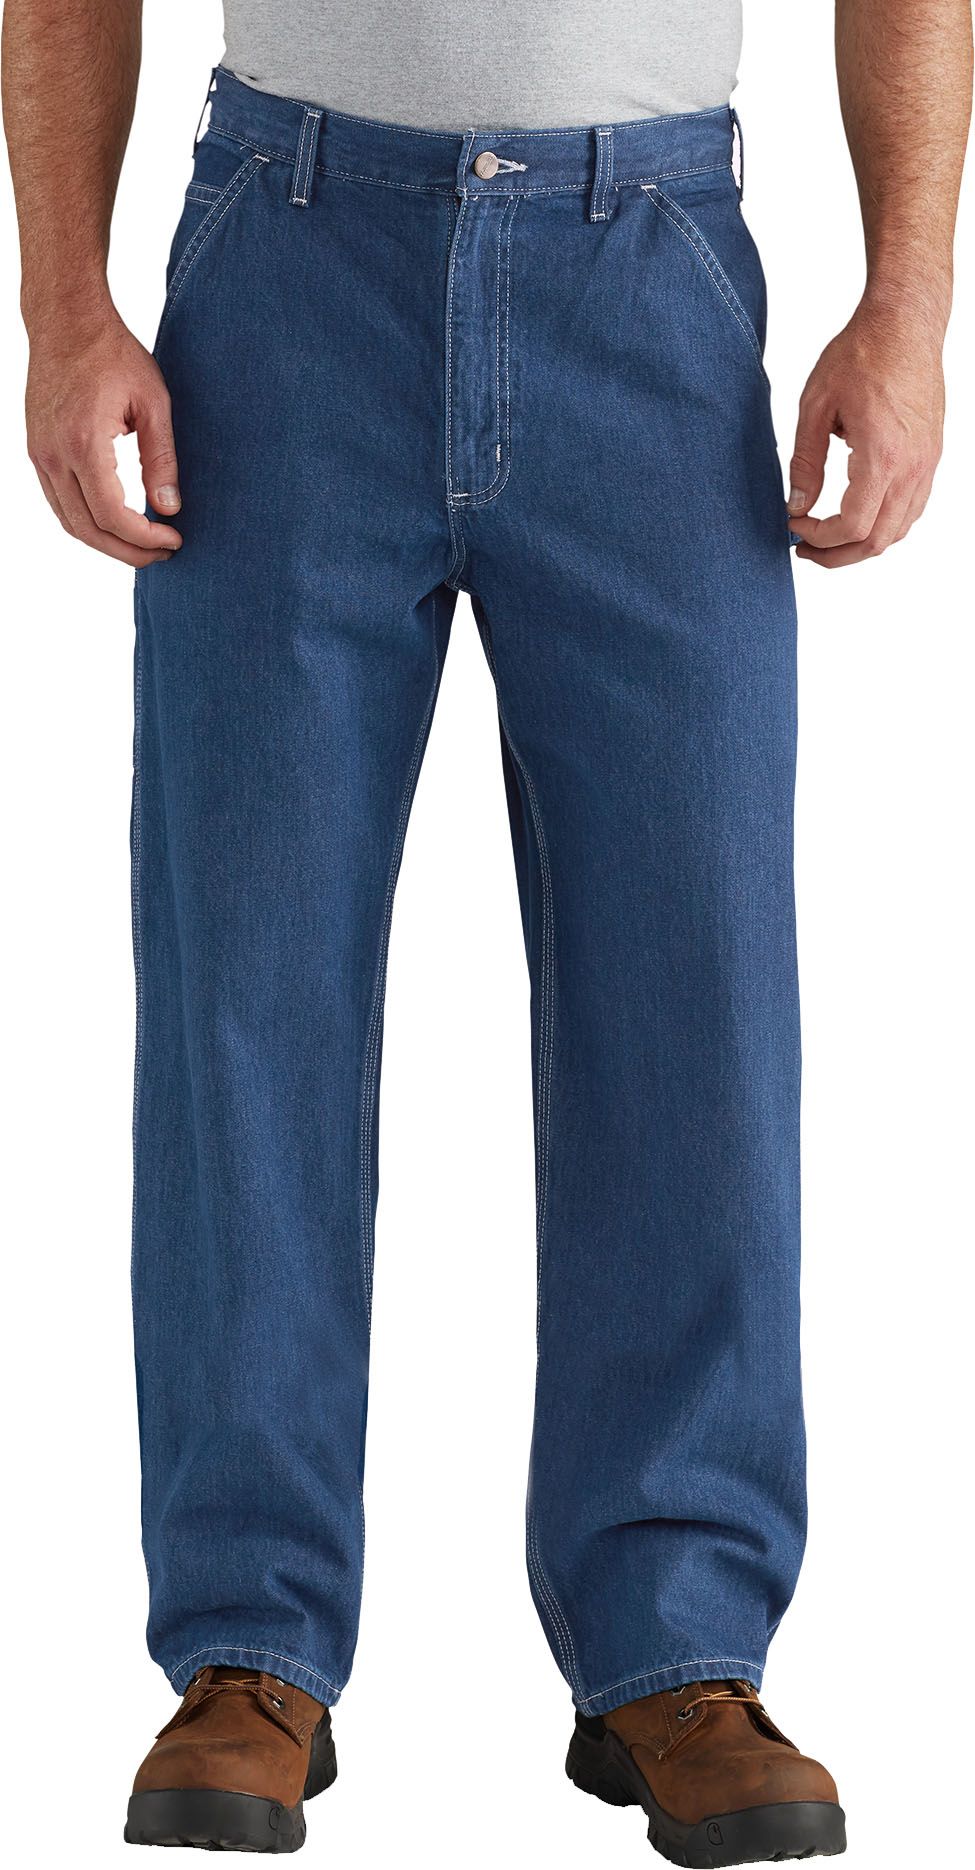 best deal on carhartt jeans